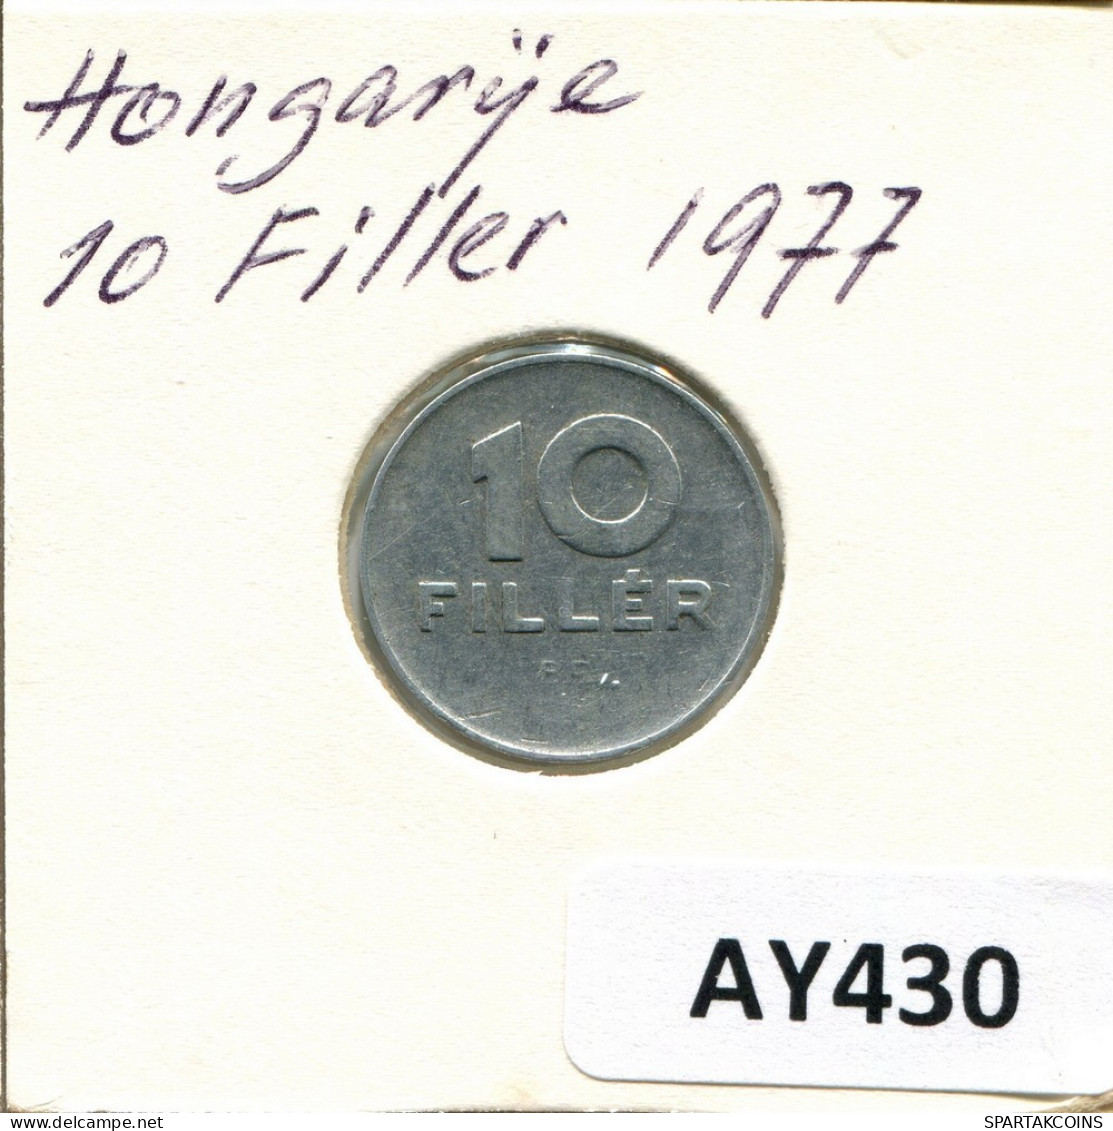 10 FILLER 1977 HONGRIE HUNGARY Pièce #AY430.F.A - Ungheria